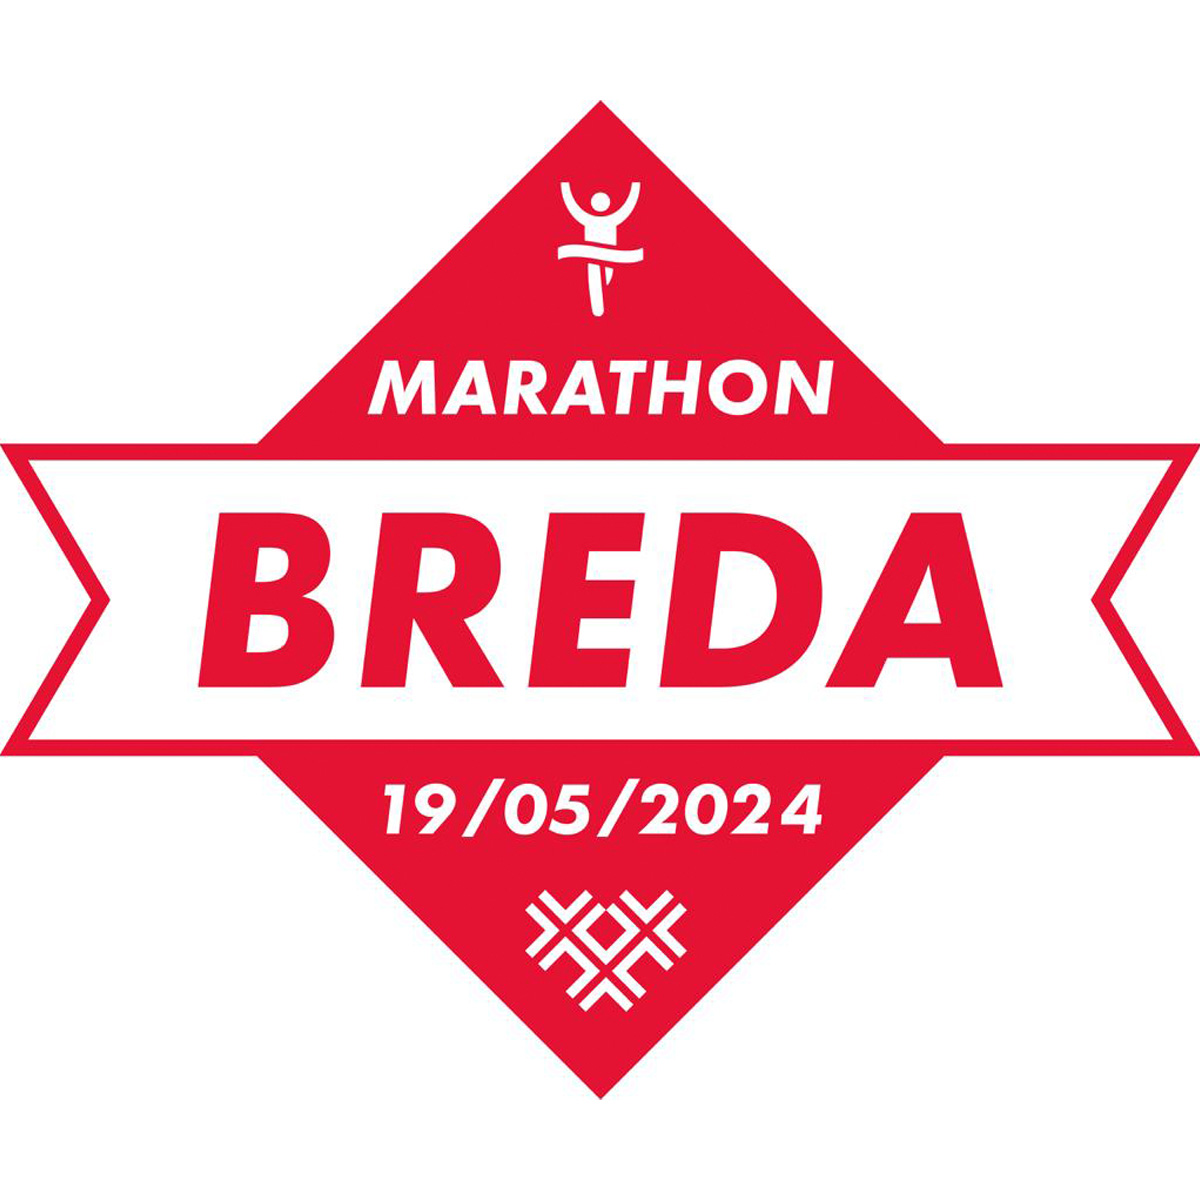 Breda Marathon